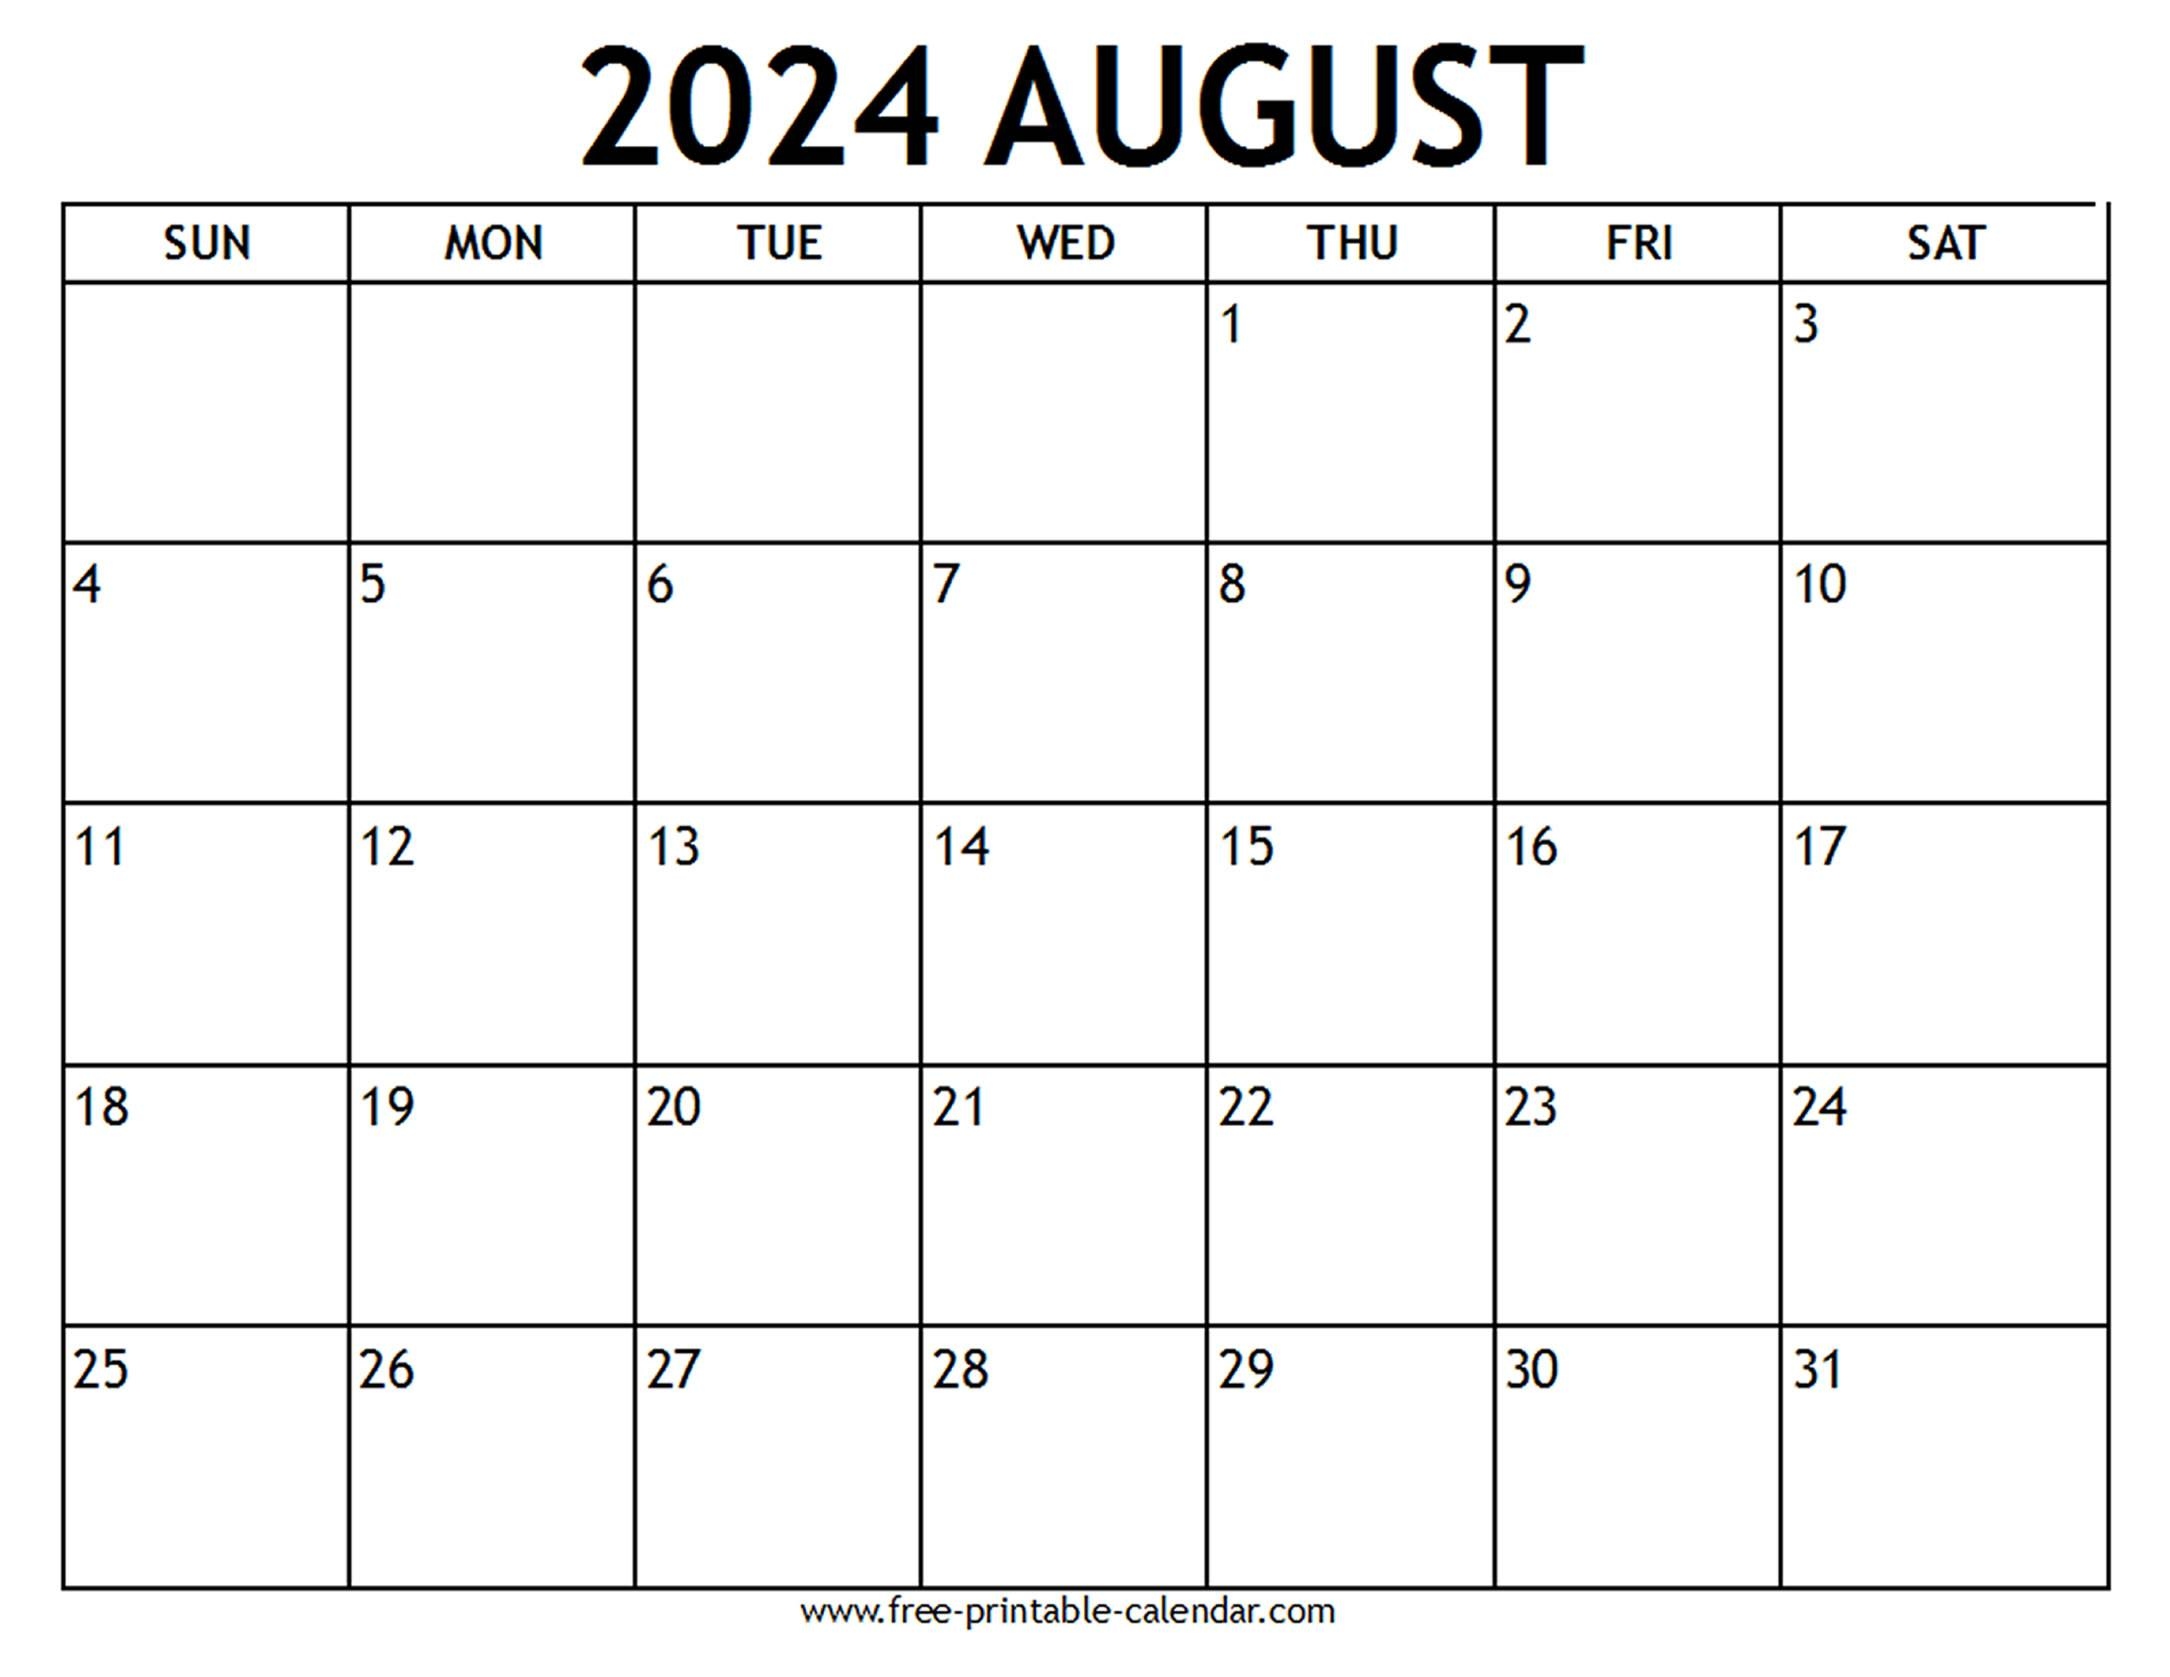 August 2024 Calendar Us Holidays - Free-Printable-Calendar inside Free Printable August 2024 Calendar With Holidays